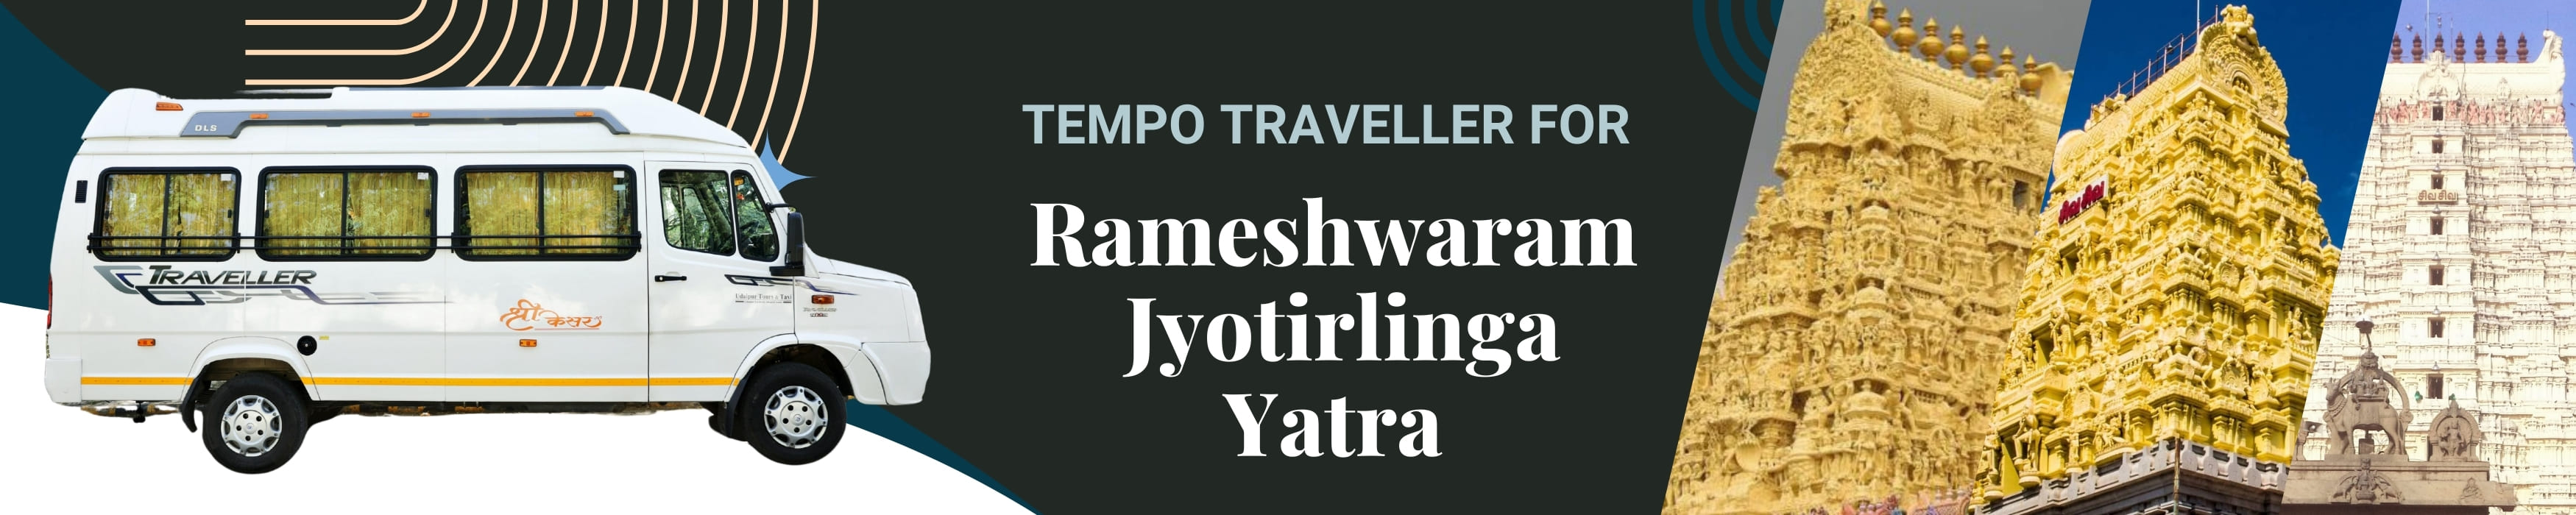 Hire Tempo Traveller For Rameshwaram Jyotirlinga Yatra